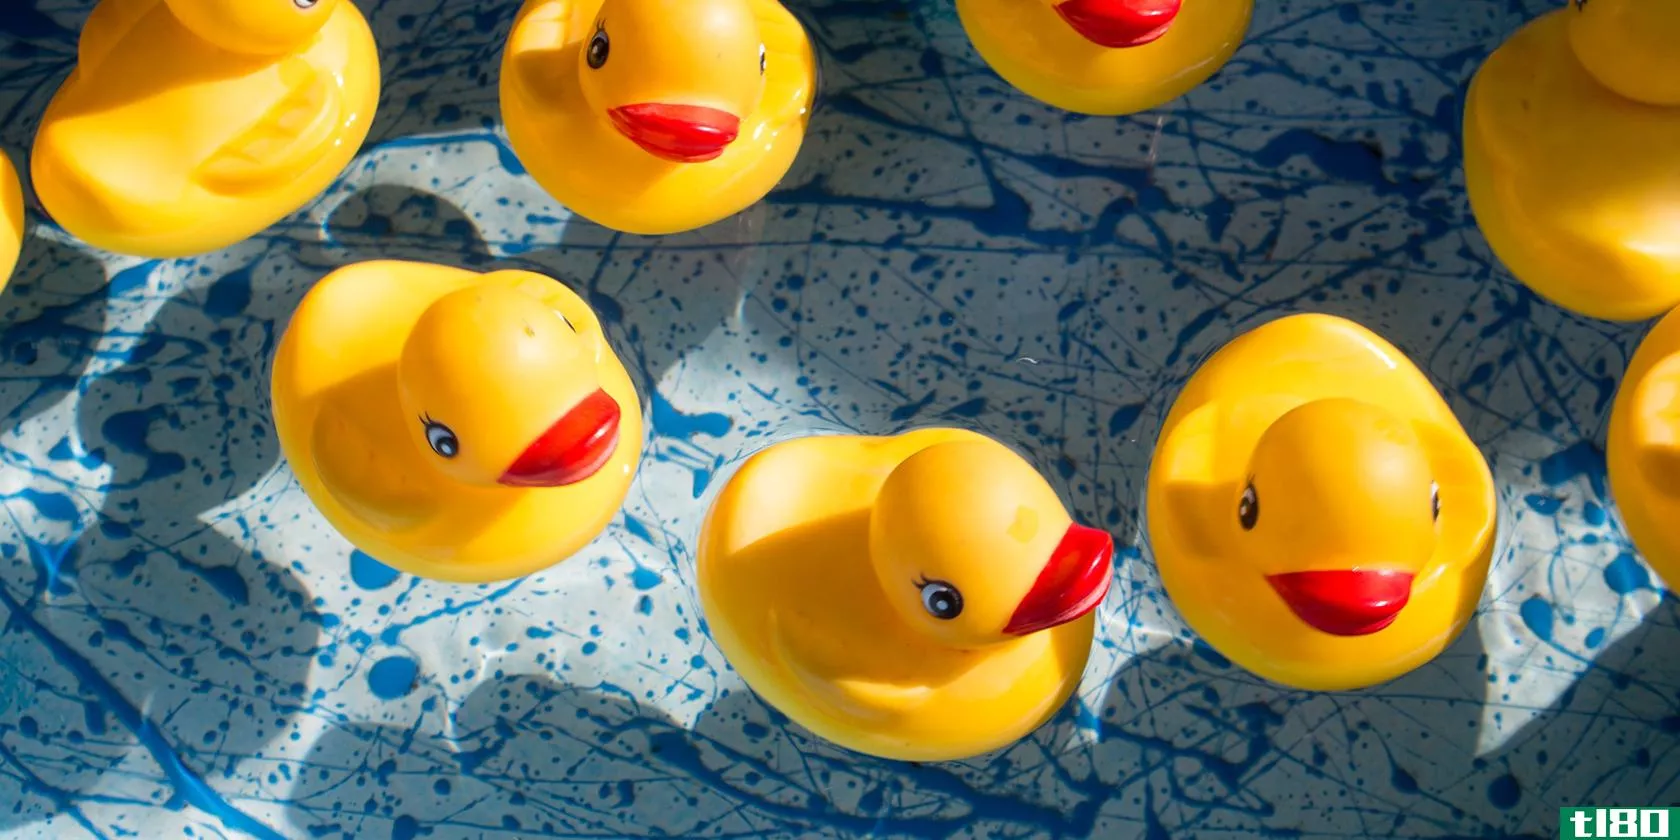 Seven yellow rubber ducks sitting in water